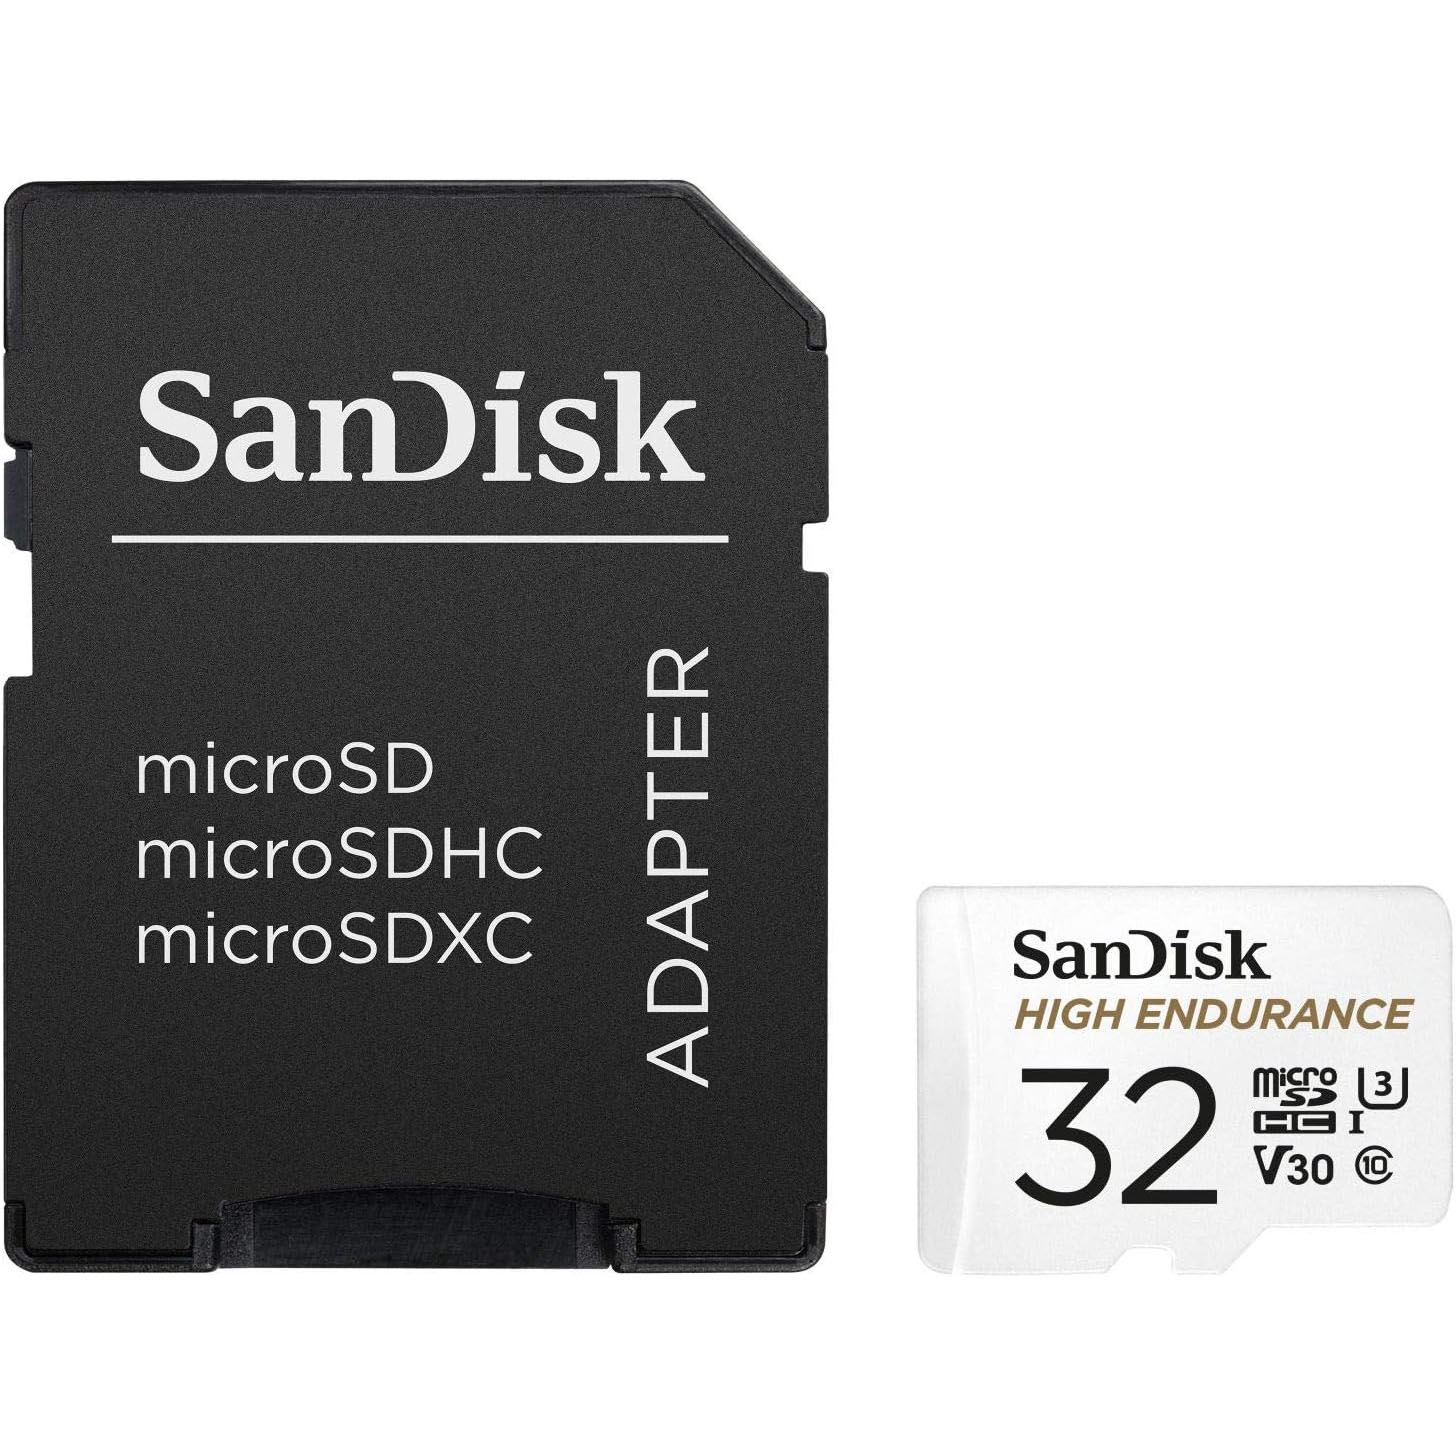 SanDisk High-Endurance-Video-Monitoring-for-Dashcams-Home-Monitoring-32-GB-microSDHC-Memory-Card-SD-Adaptor